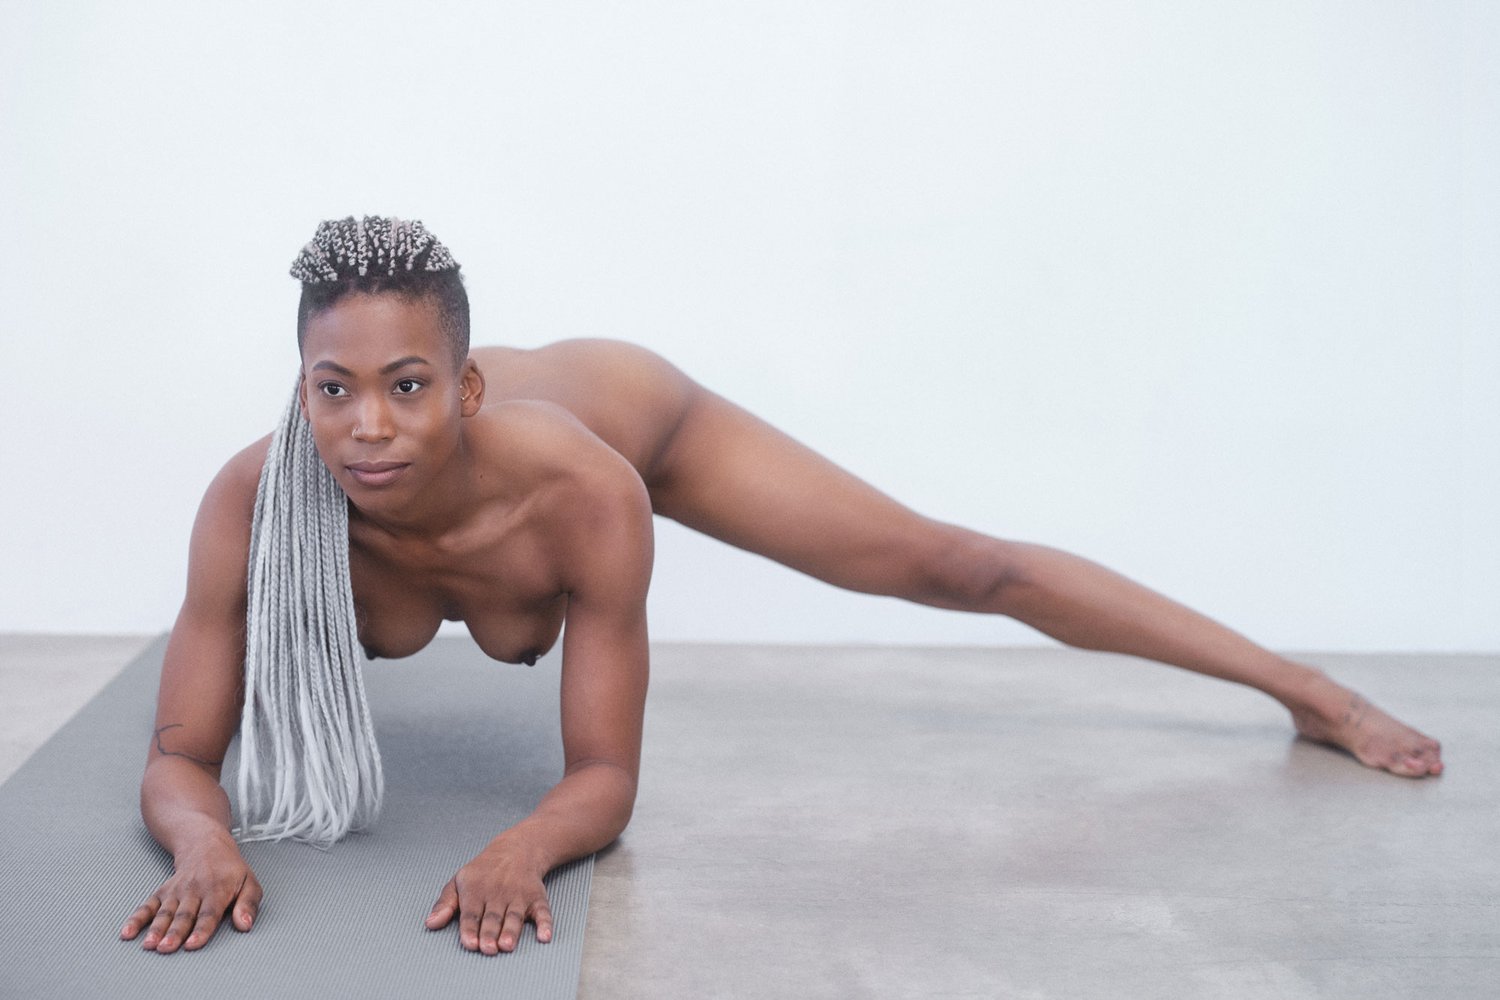 david pinon share naked chicks doing yoga photos